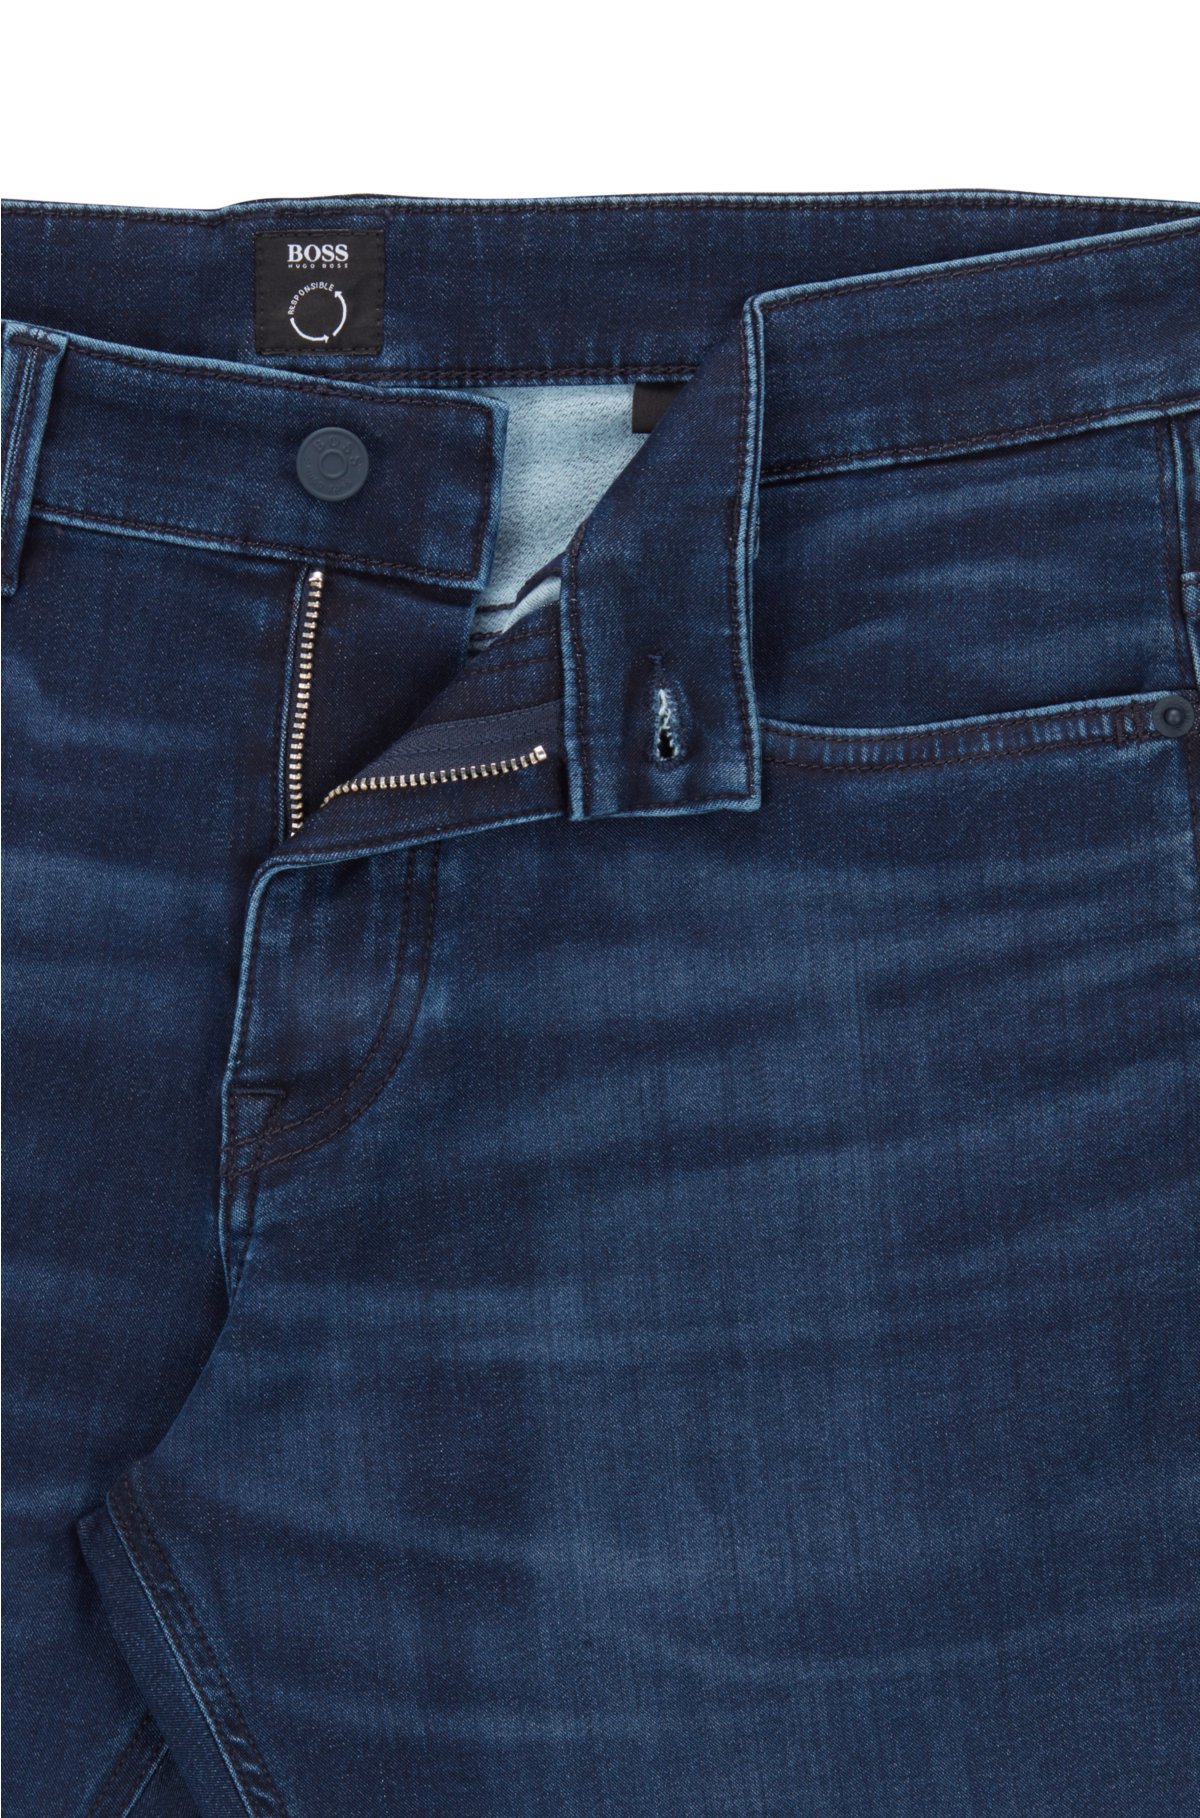 - Slim-fit jeans in dark-blue brushed denim